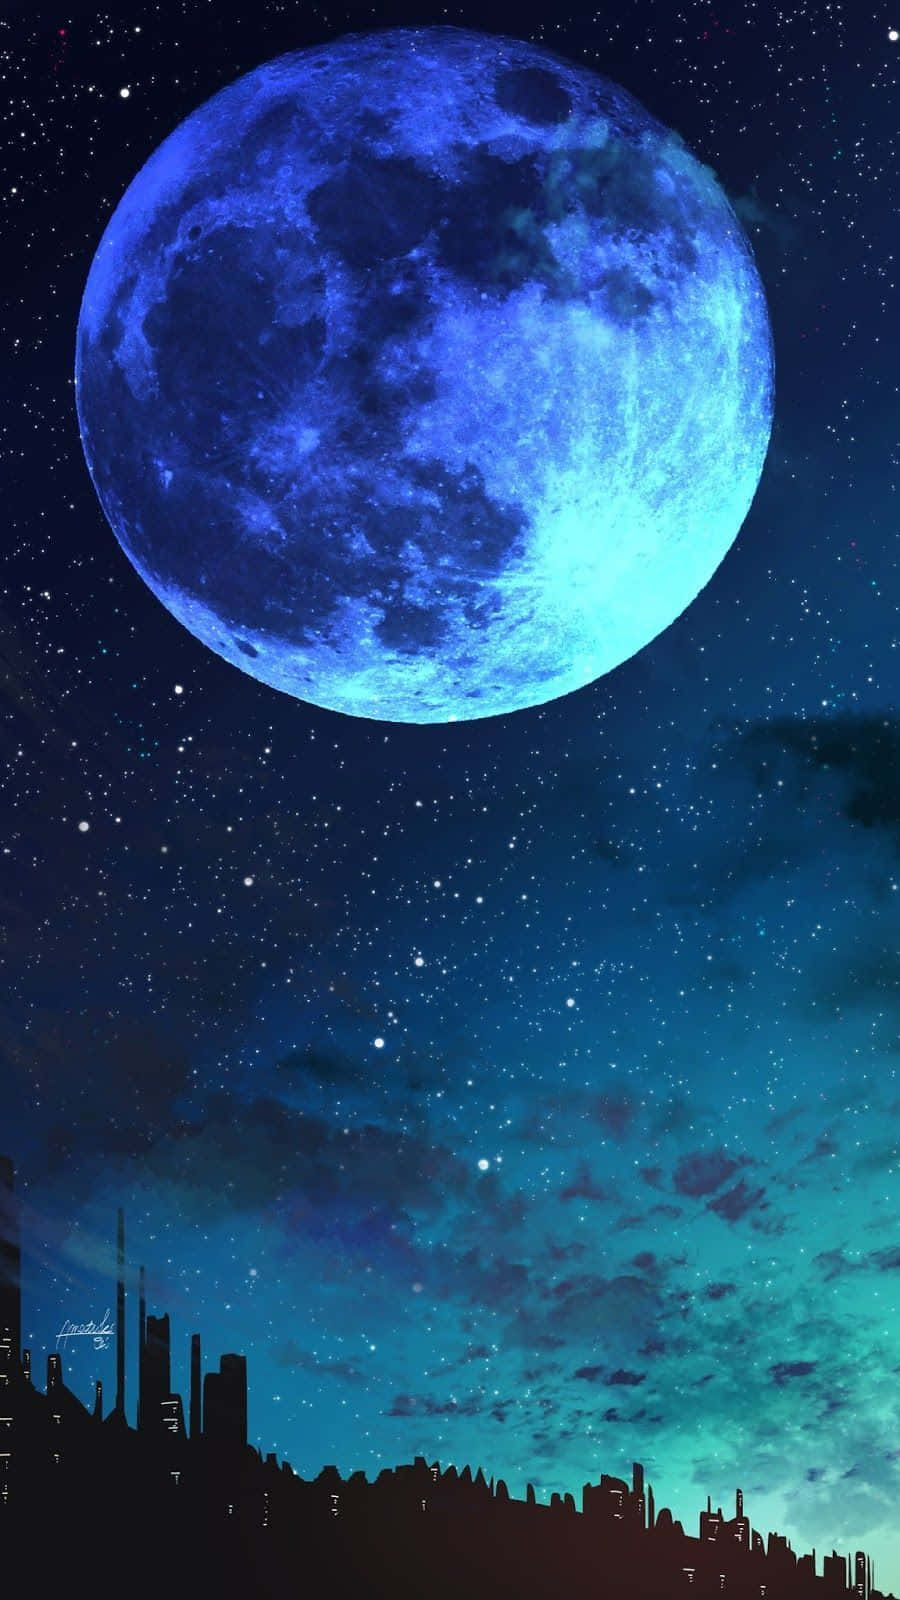 Seek adventure beyond the horizon with the Moon Iphone Wallpaper